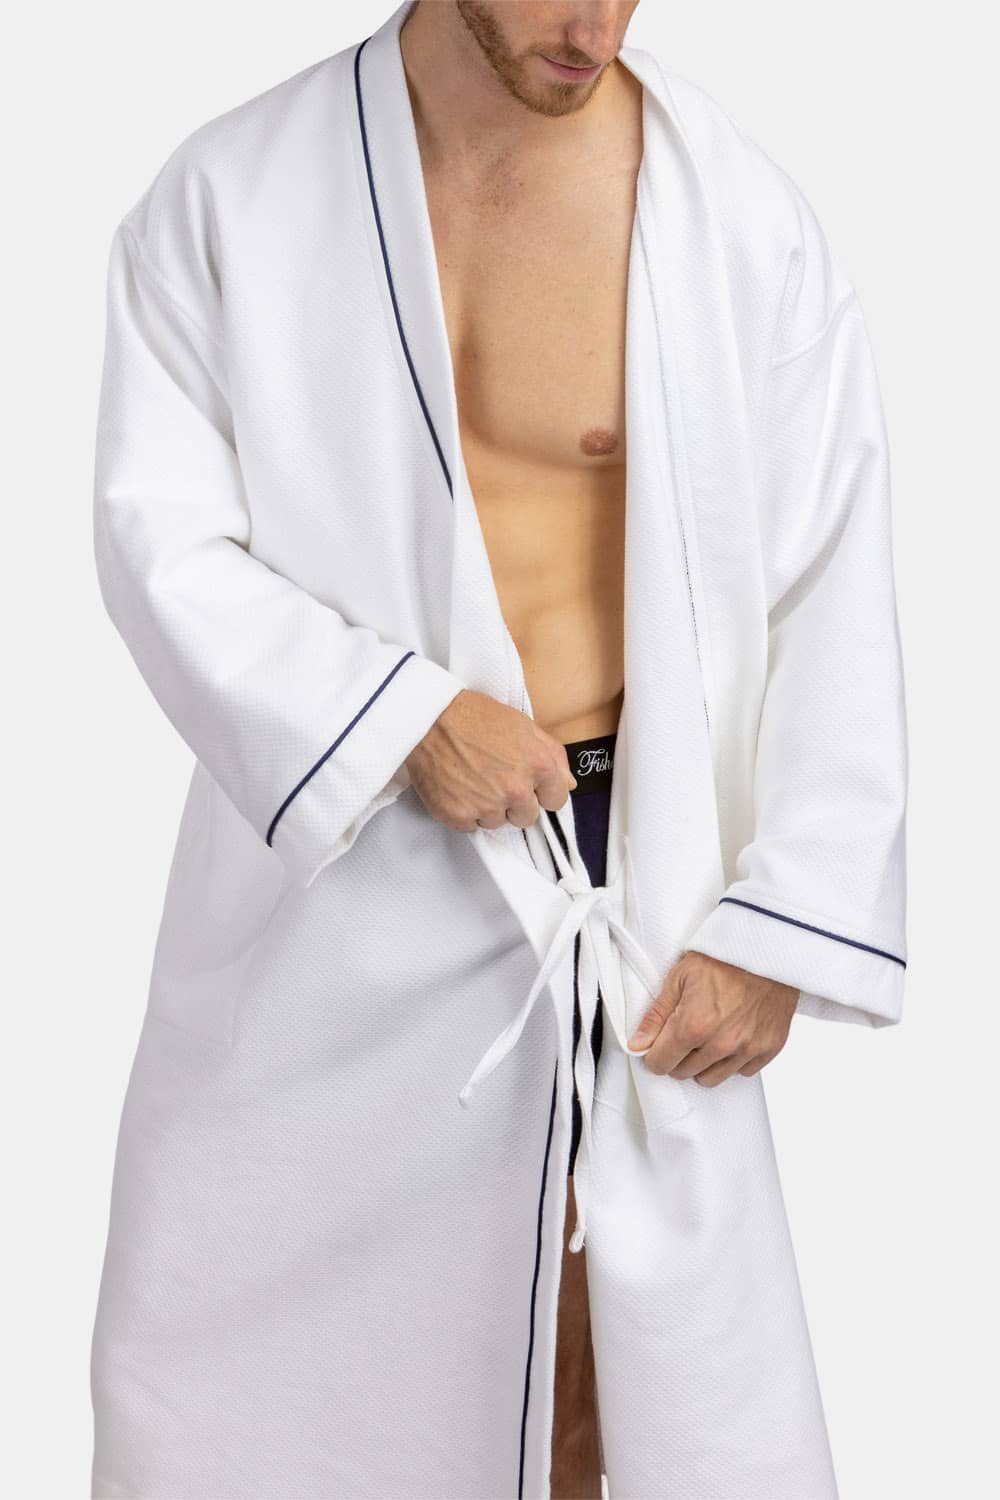 Texere Men's Modal Kimono Bathrobe with Quilted Design Mens>Sleepwear>Robe Fishers Finery 